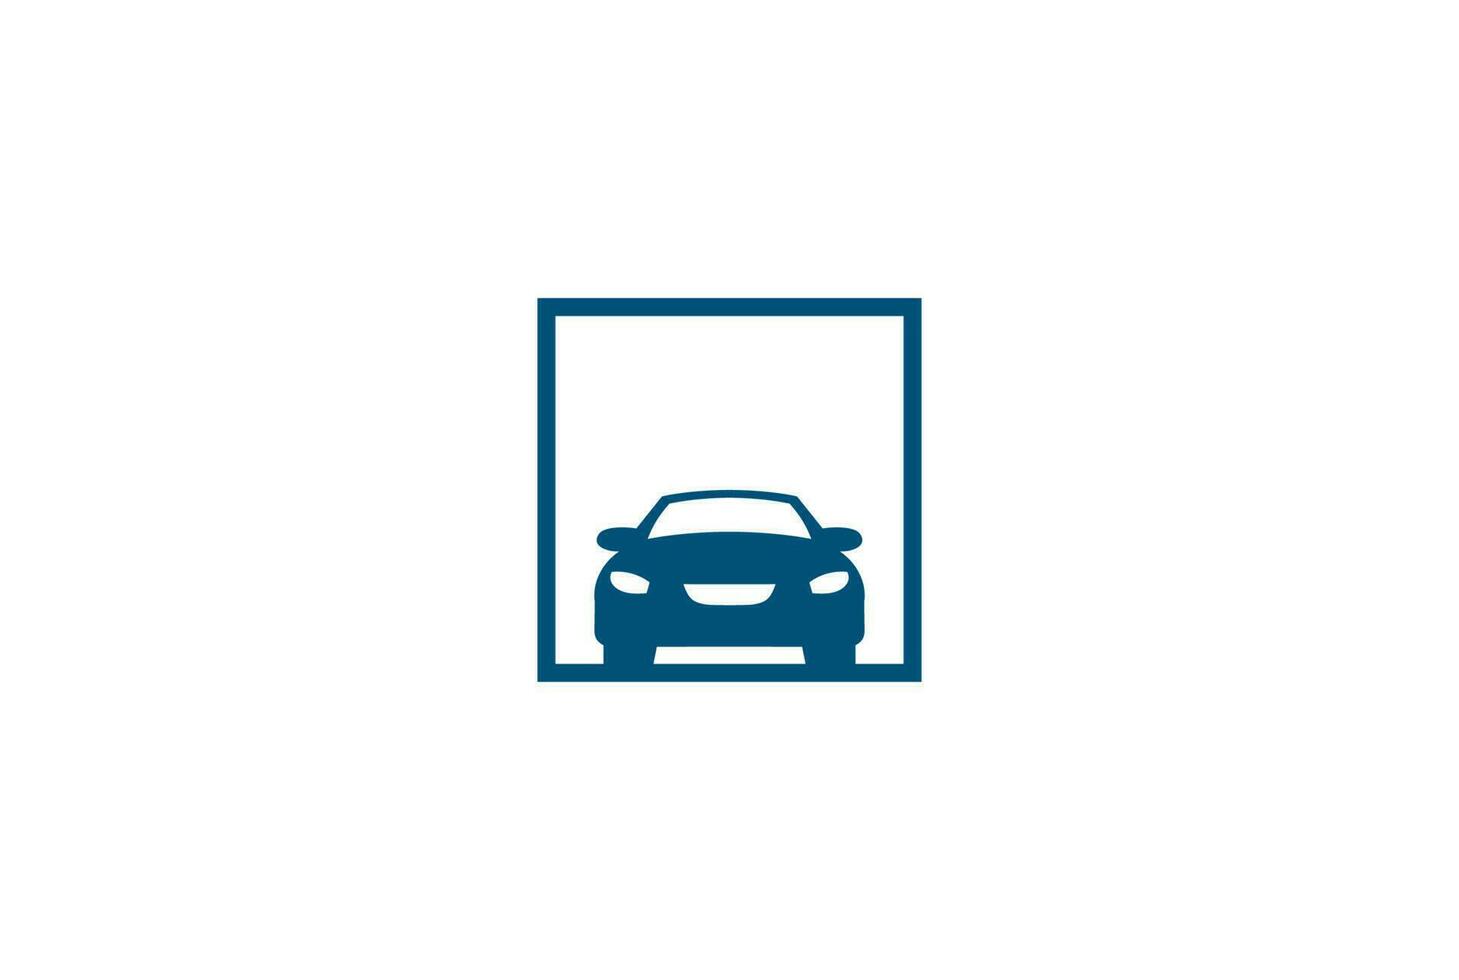 carro minimalista simples para oficina de garagem ou design de logotipo de seguro de carro vetor